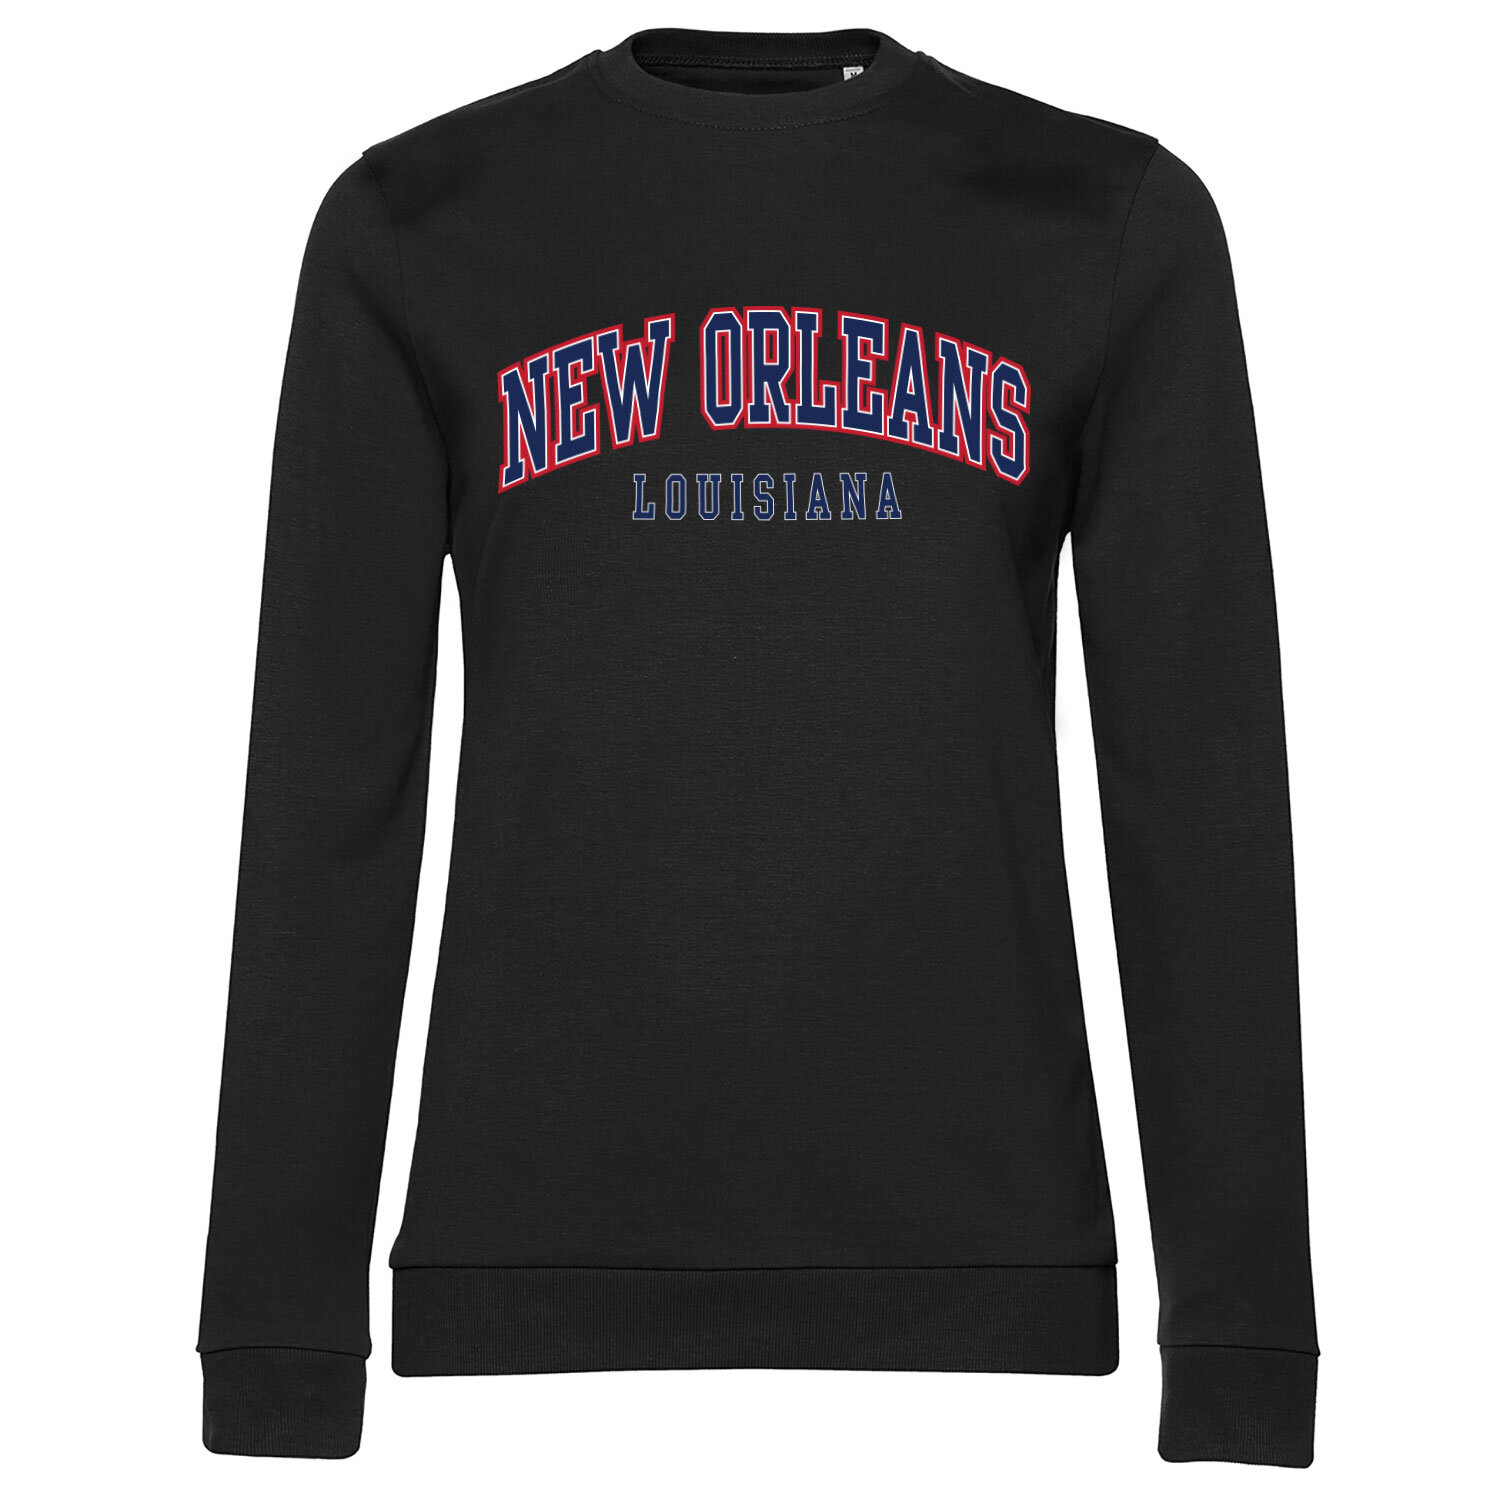 New Orleans - Louisiana Girly Sweatshirt